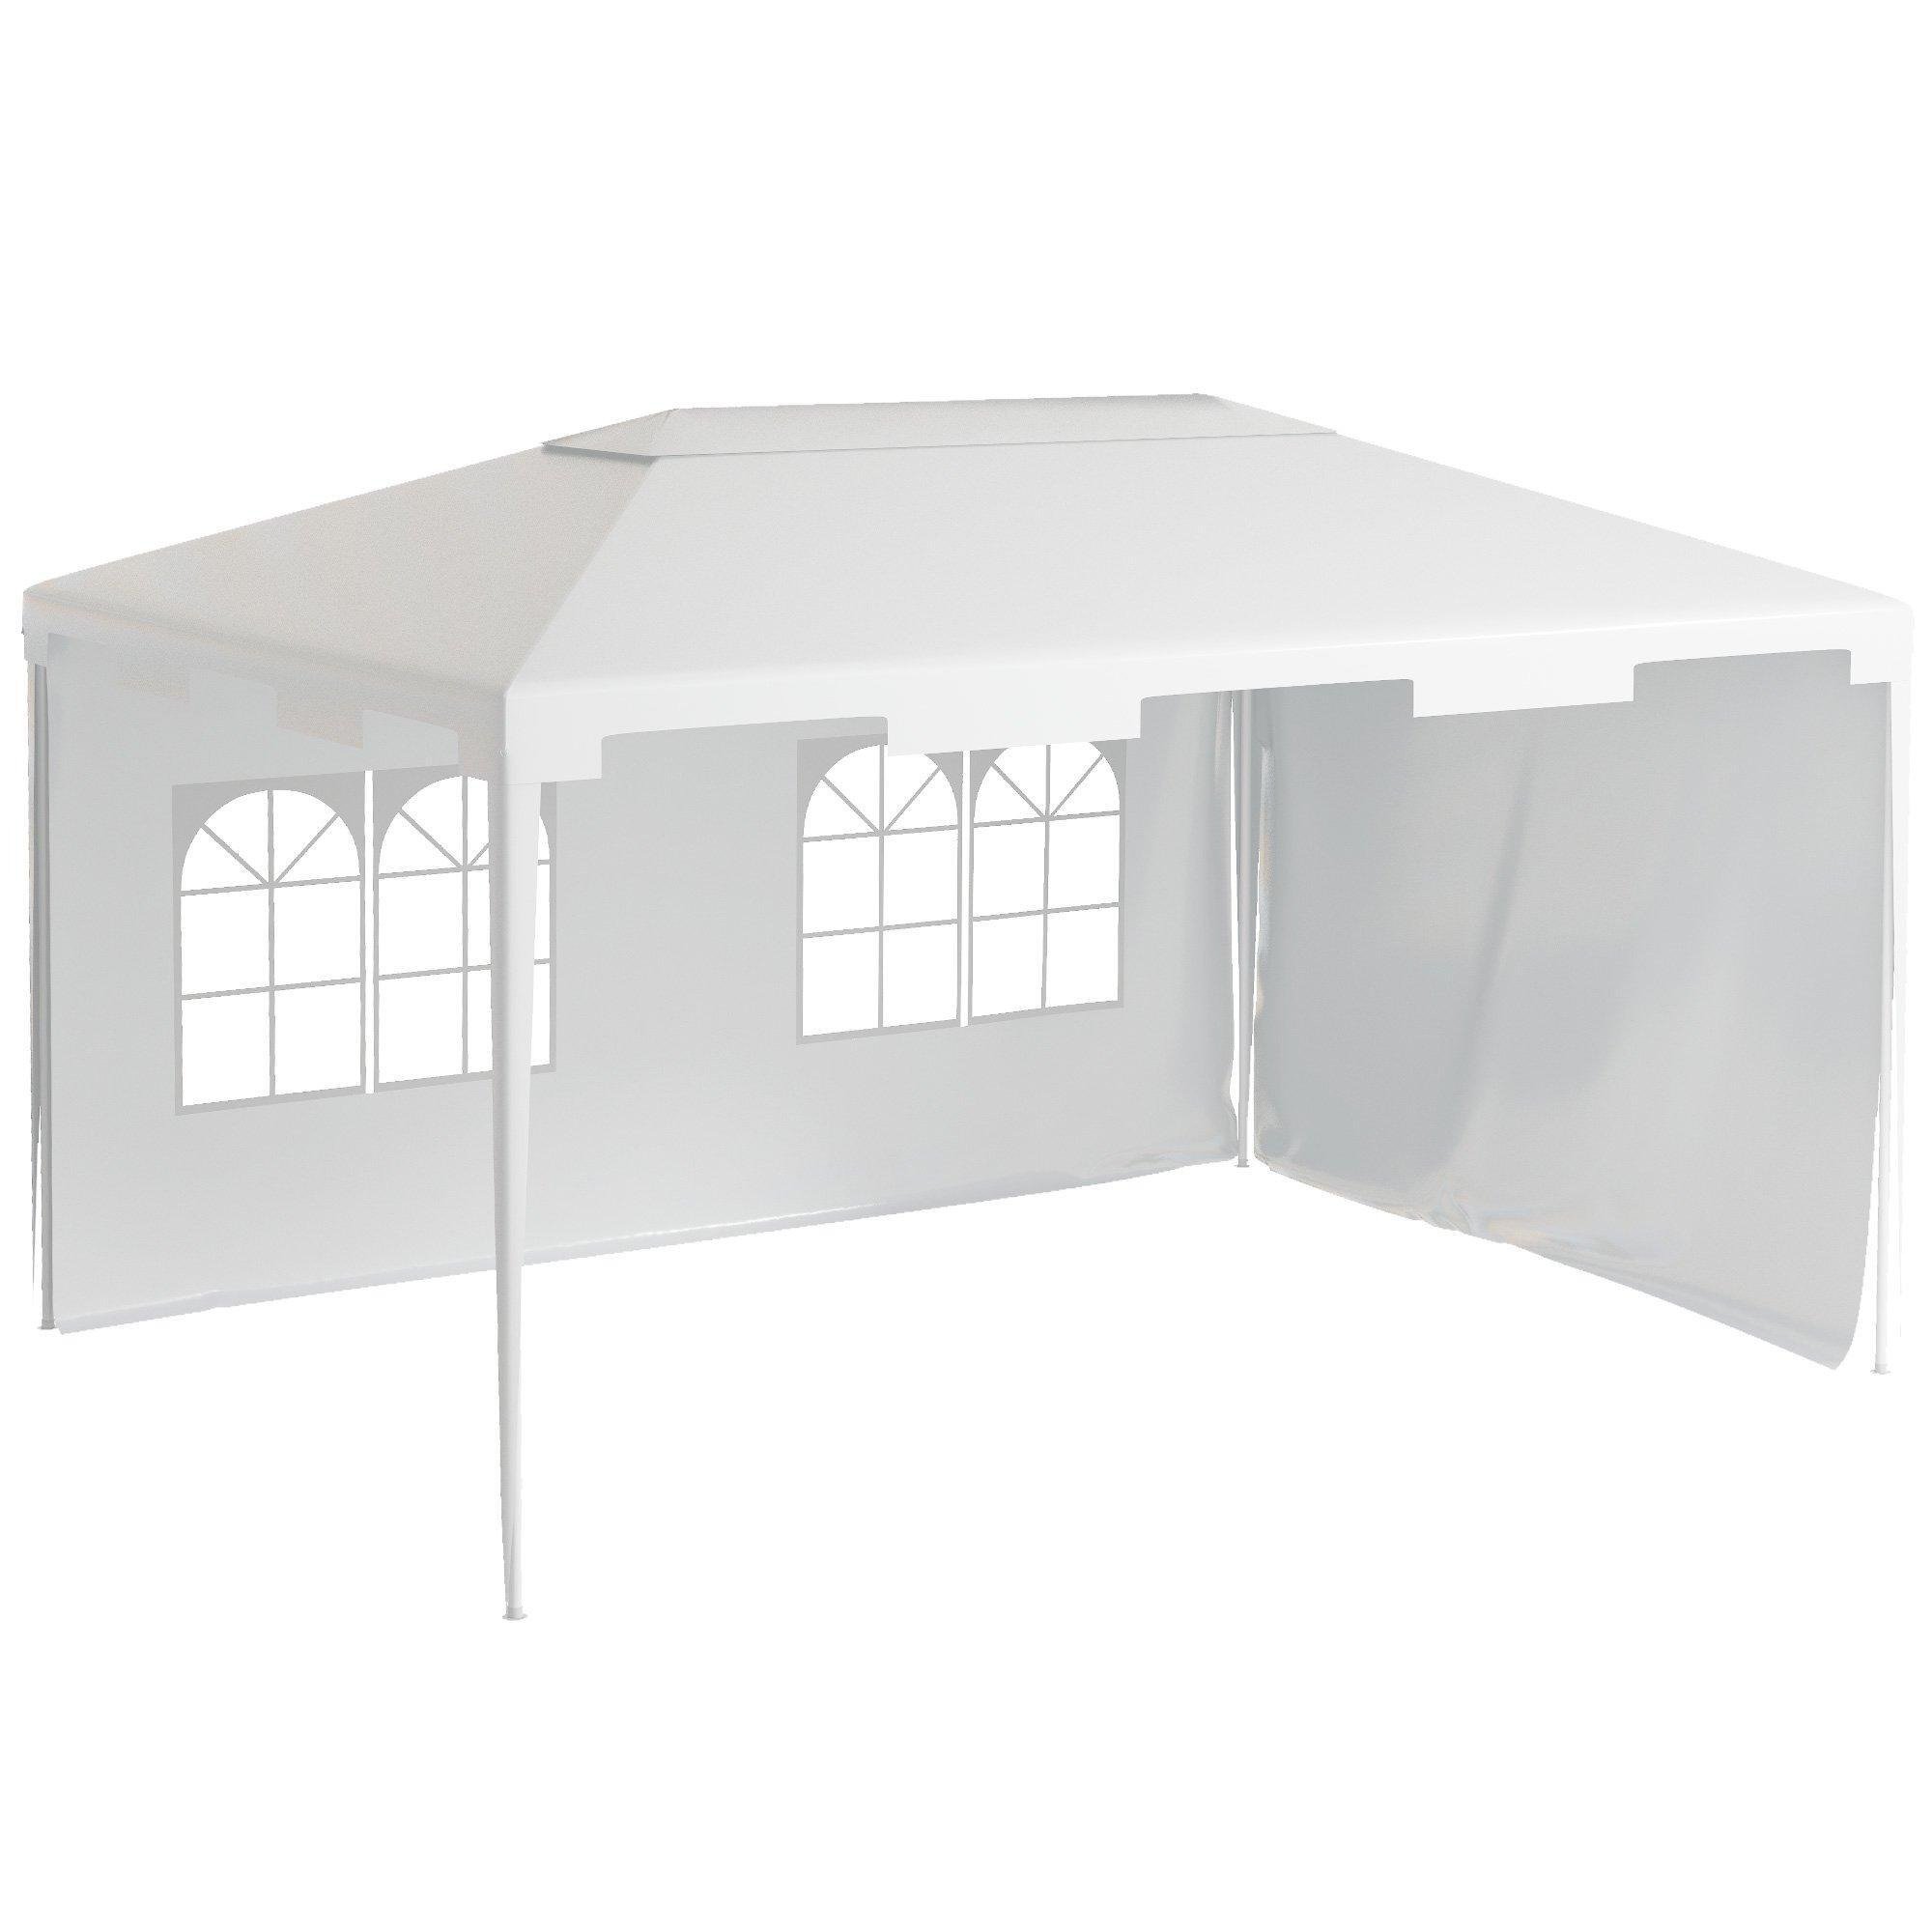 4 x 3m Party Tent Waterproof Garden Gazebo Canopy Wedding Cover Shade - image 1